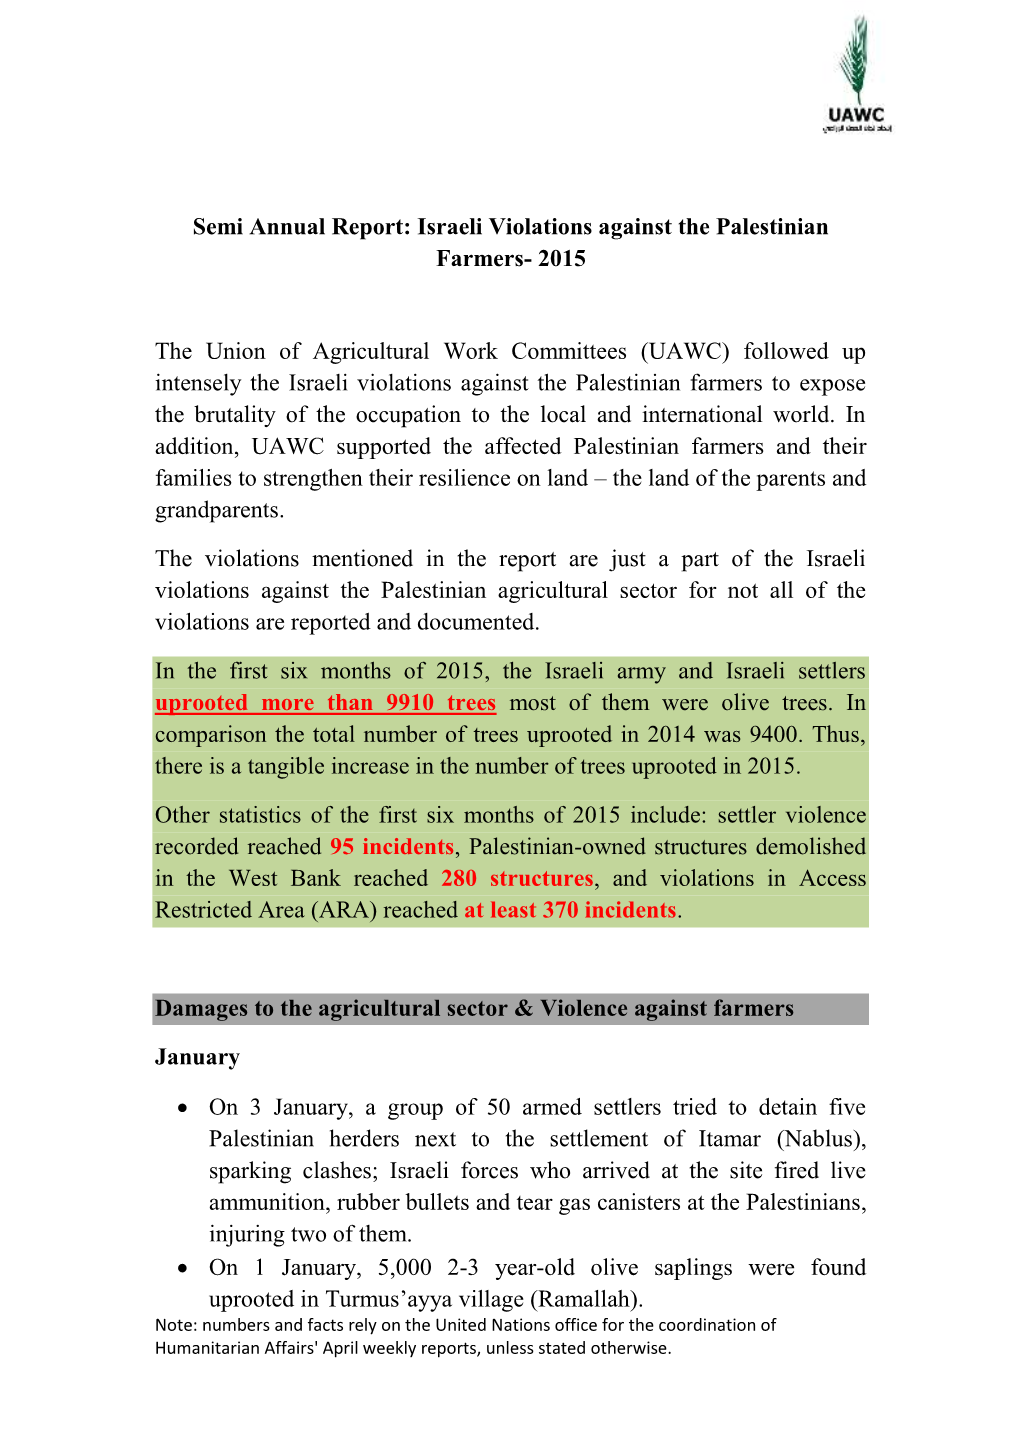 Semi Annual Report: Israeli Violations Against the Palestinian Farmers- 2015